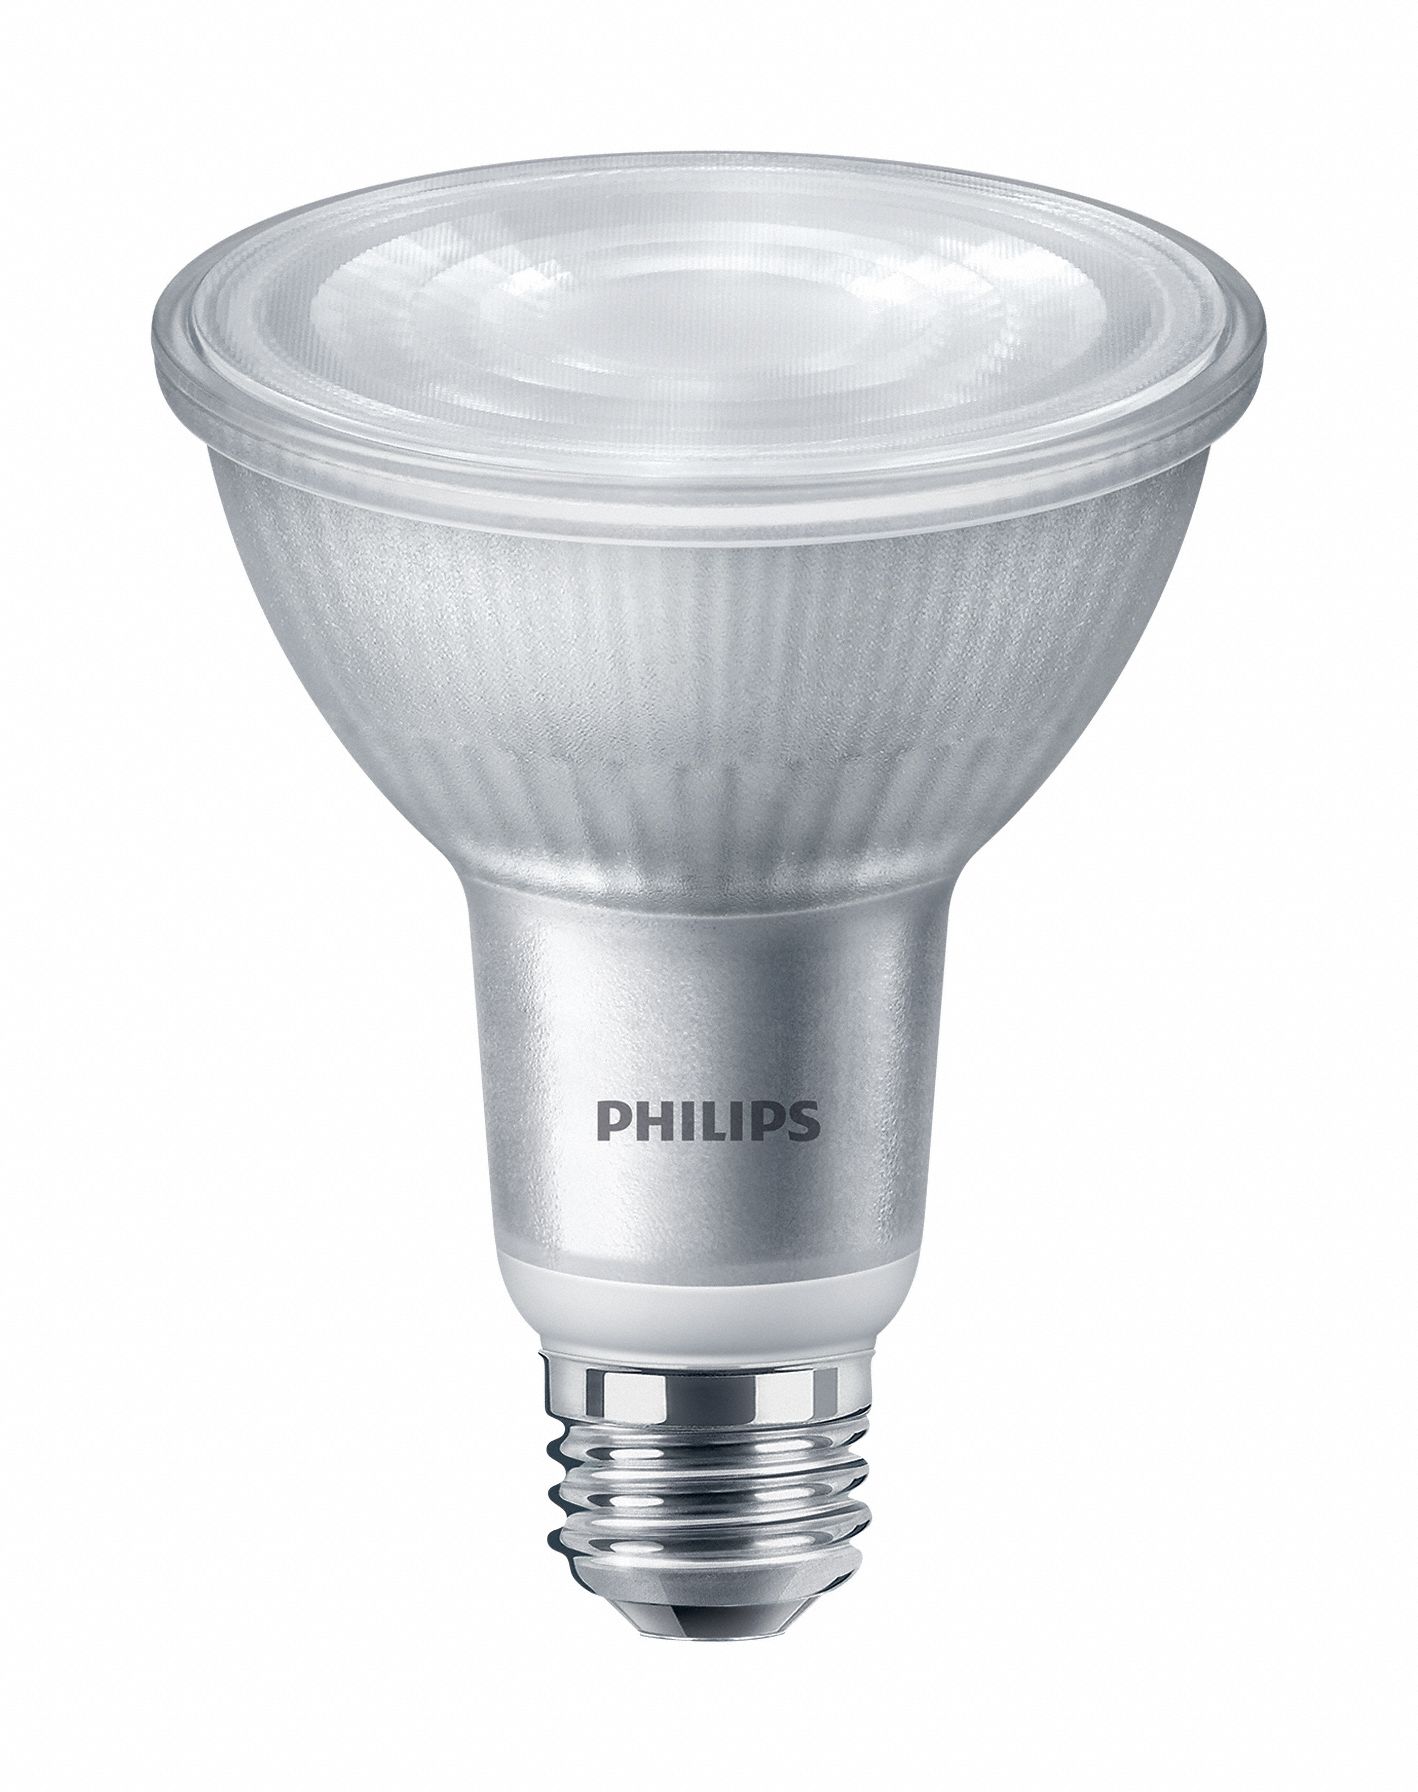 PHILIPS, PAR30L, Screw (E26), LED PAR LAMP 784N76|8.5PAR30L/LED/927/F40/DIM/ULW/120V 6/1FB -